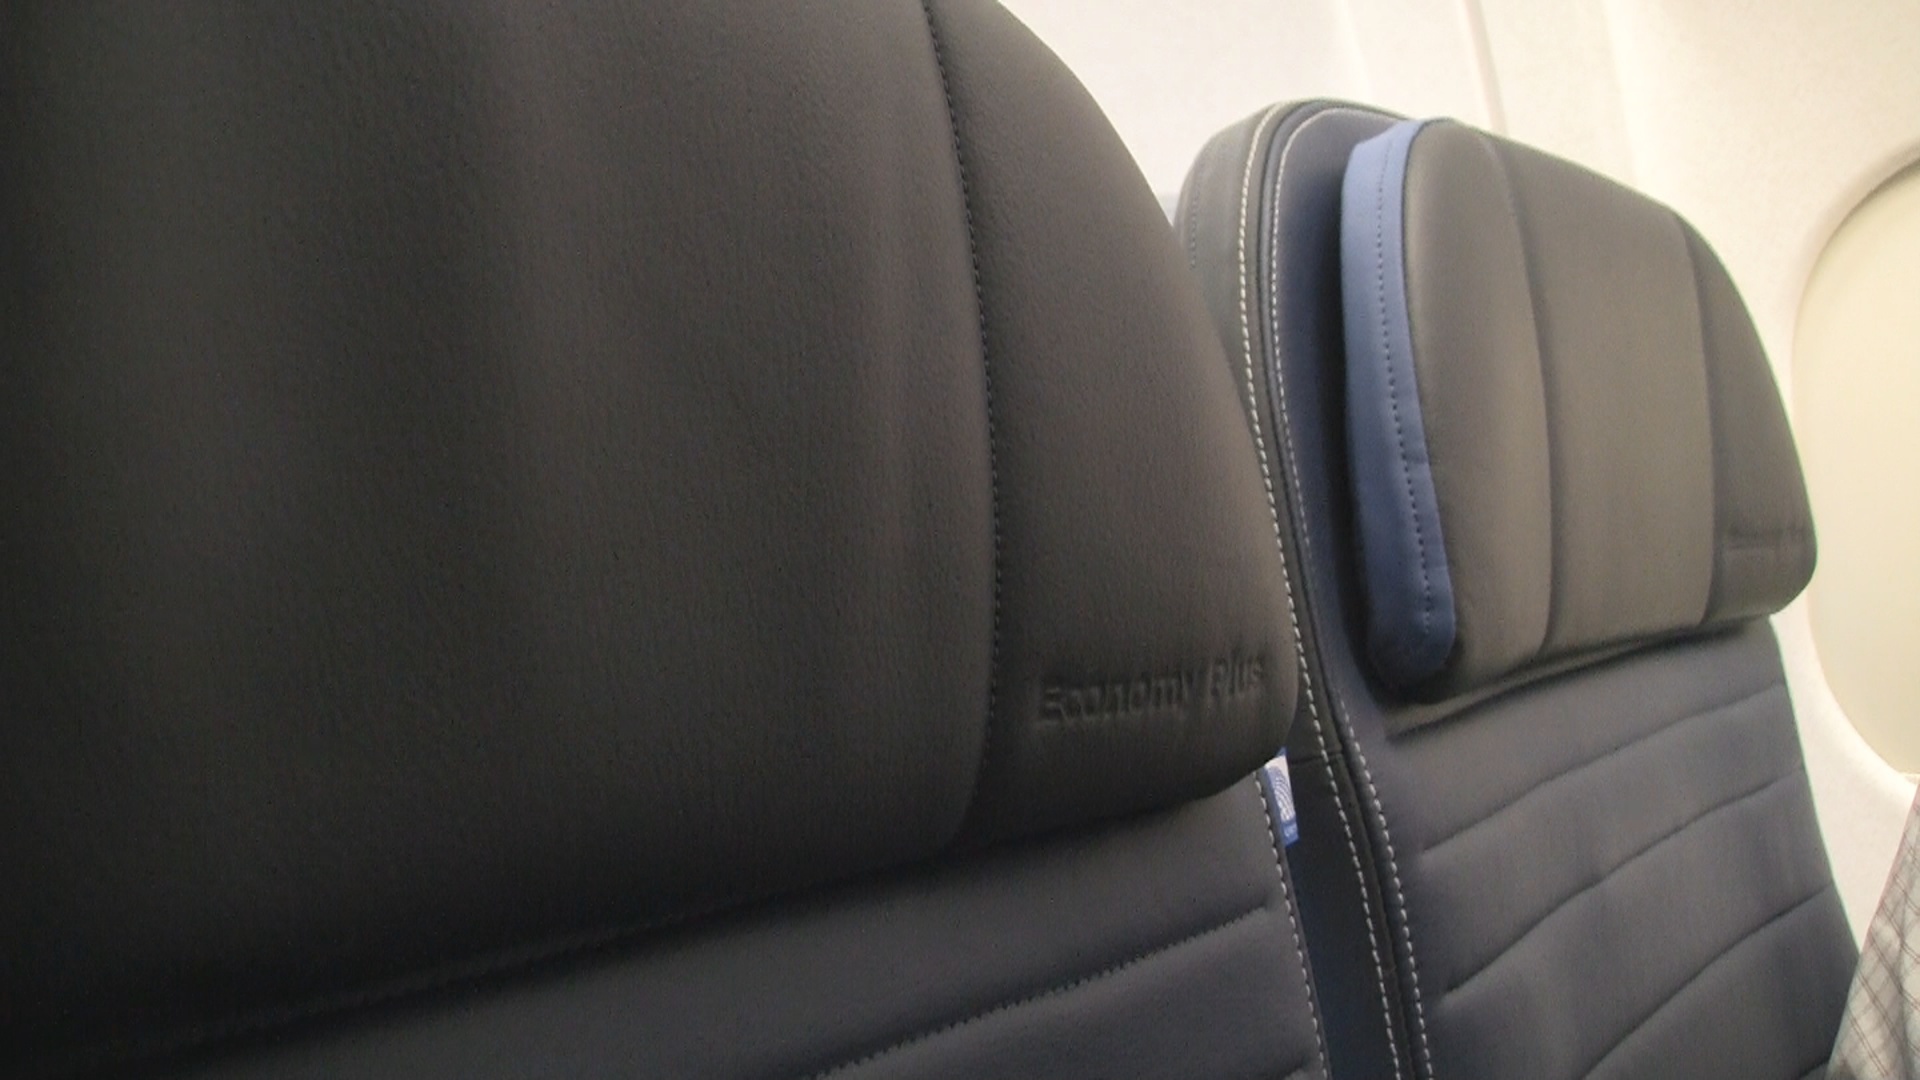 Slimline seats aboard United A319